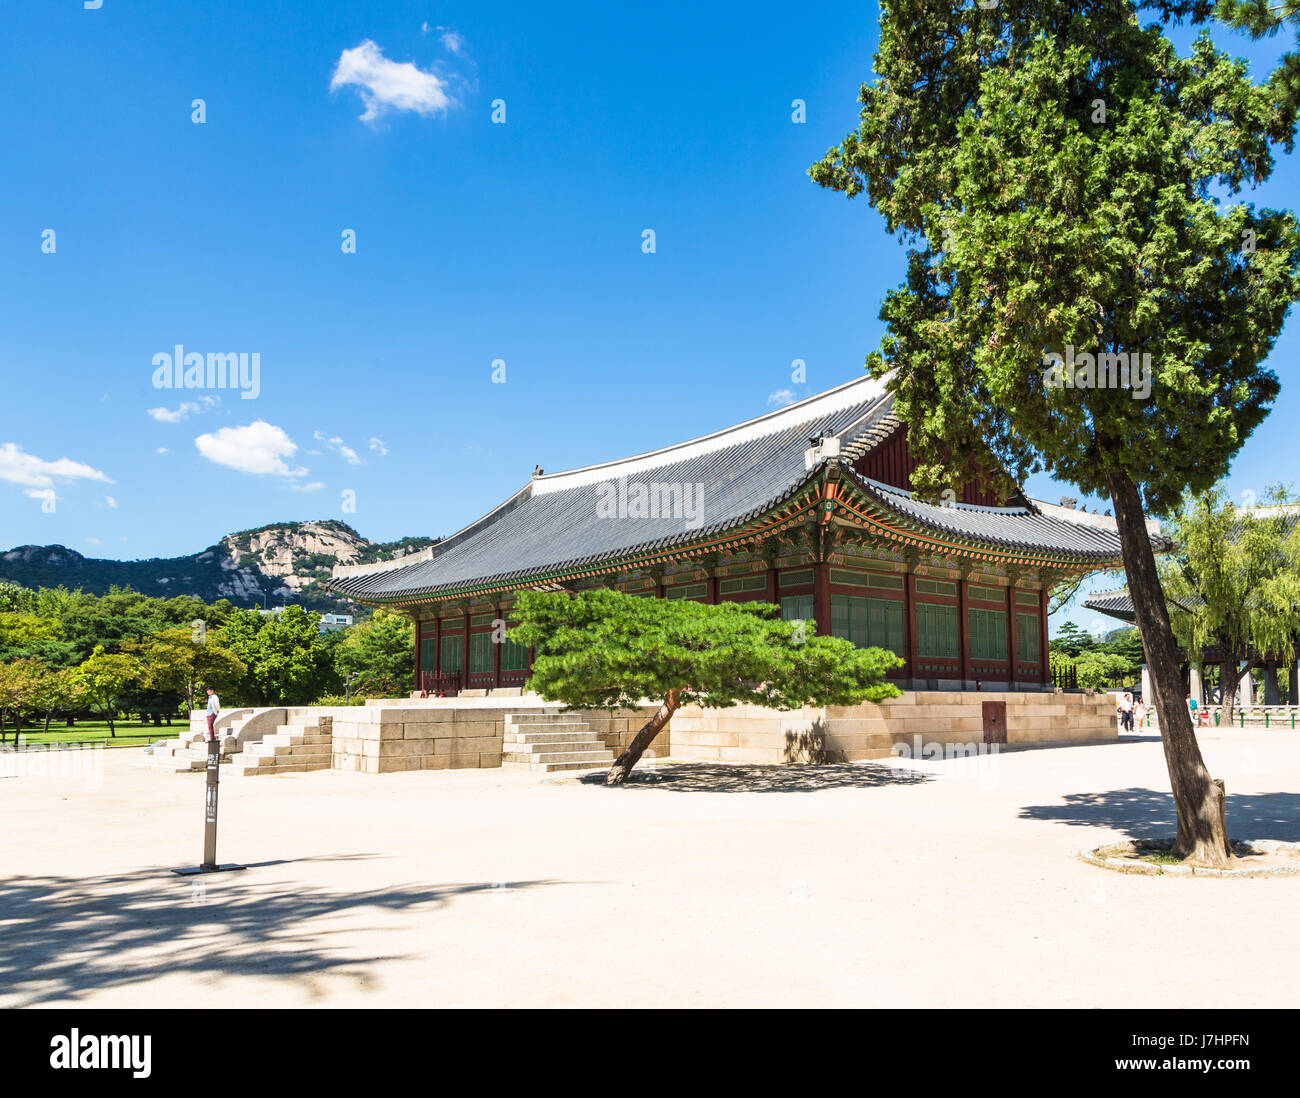 A pagoda in Gyeongbokgung palace, Seoul main royal palace in South Korea capital city Stock Photo